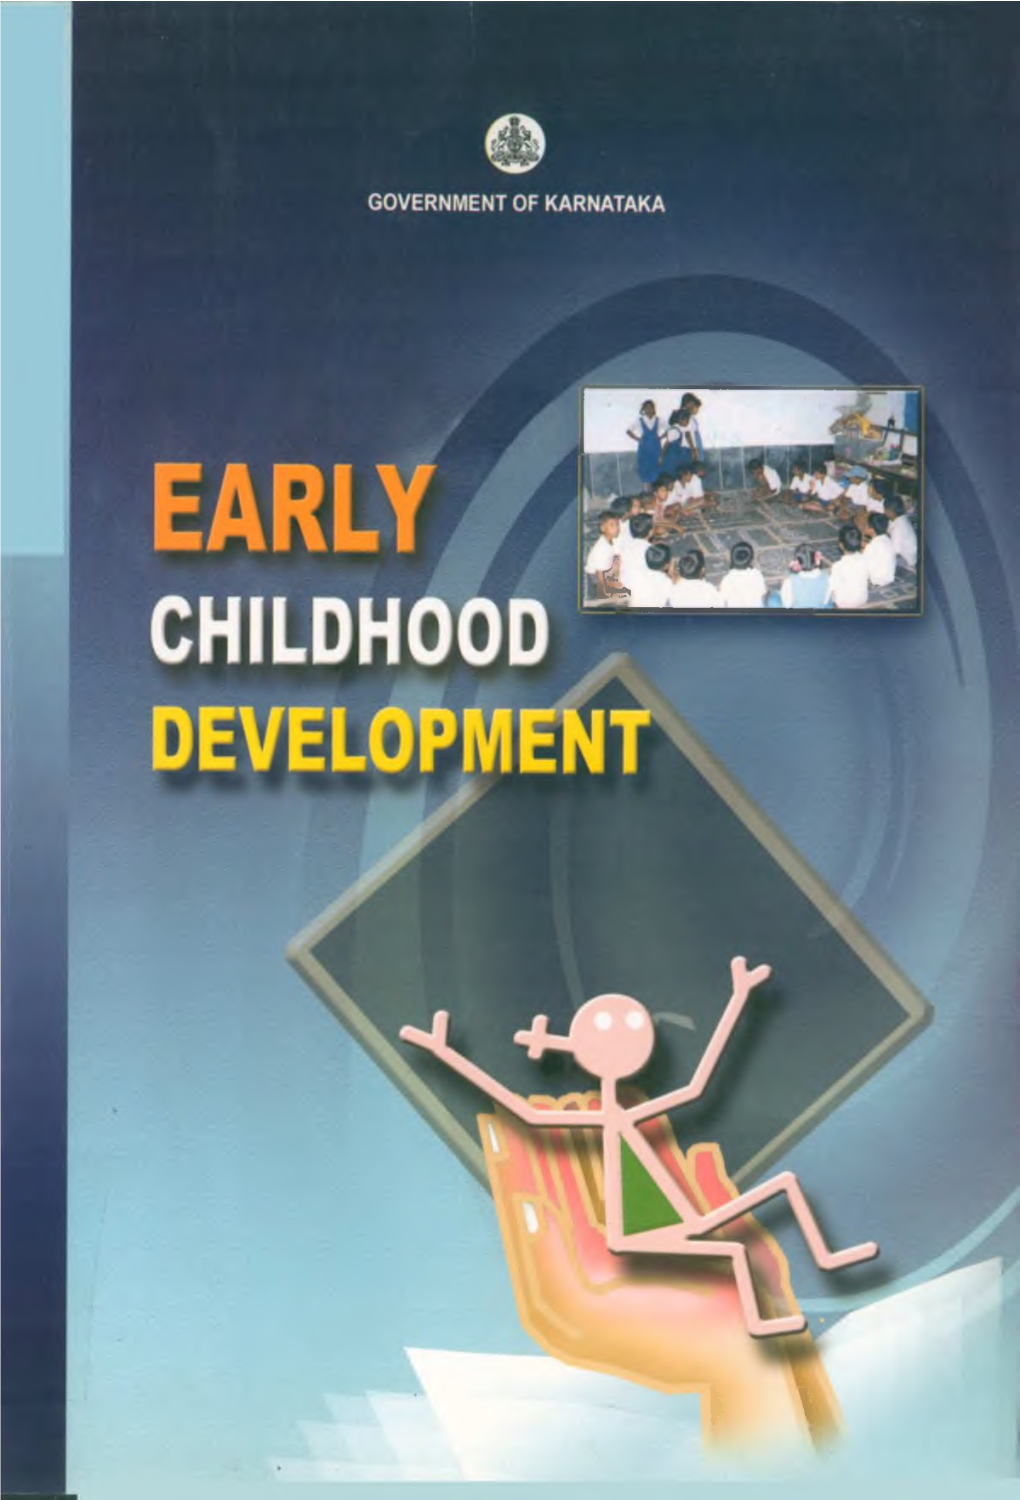 Early Childhood Development Programme in Karnataka